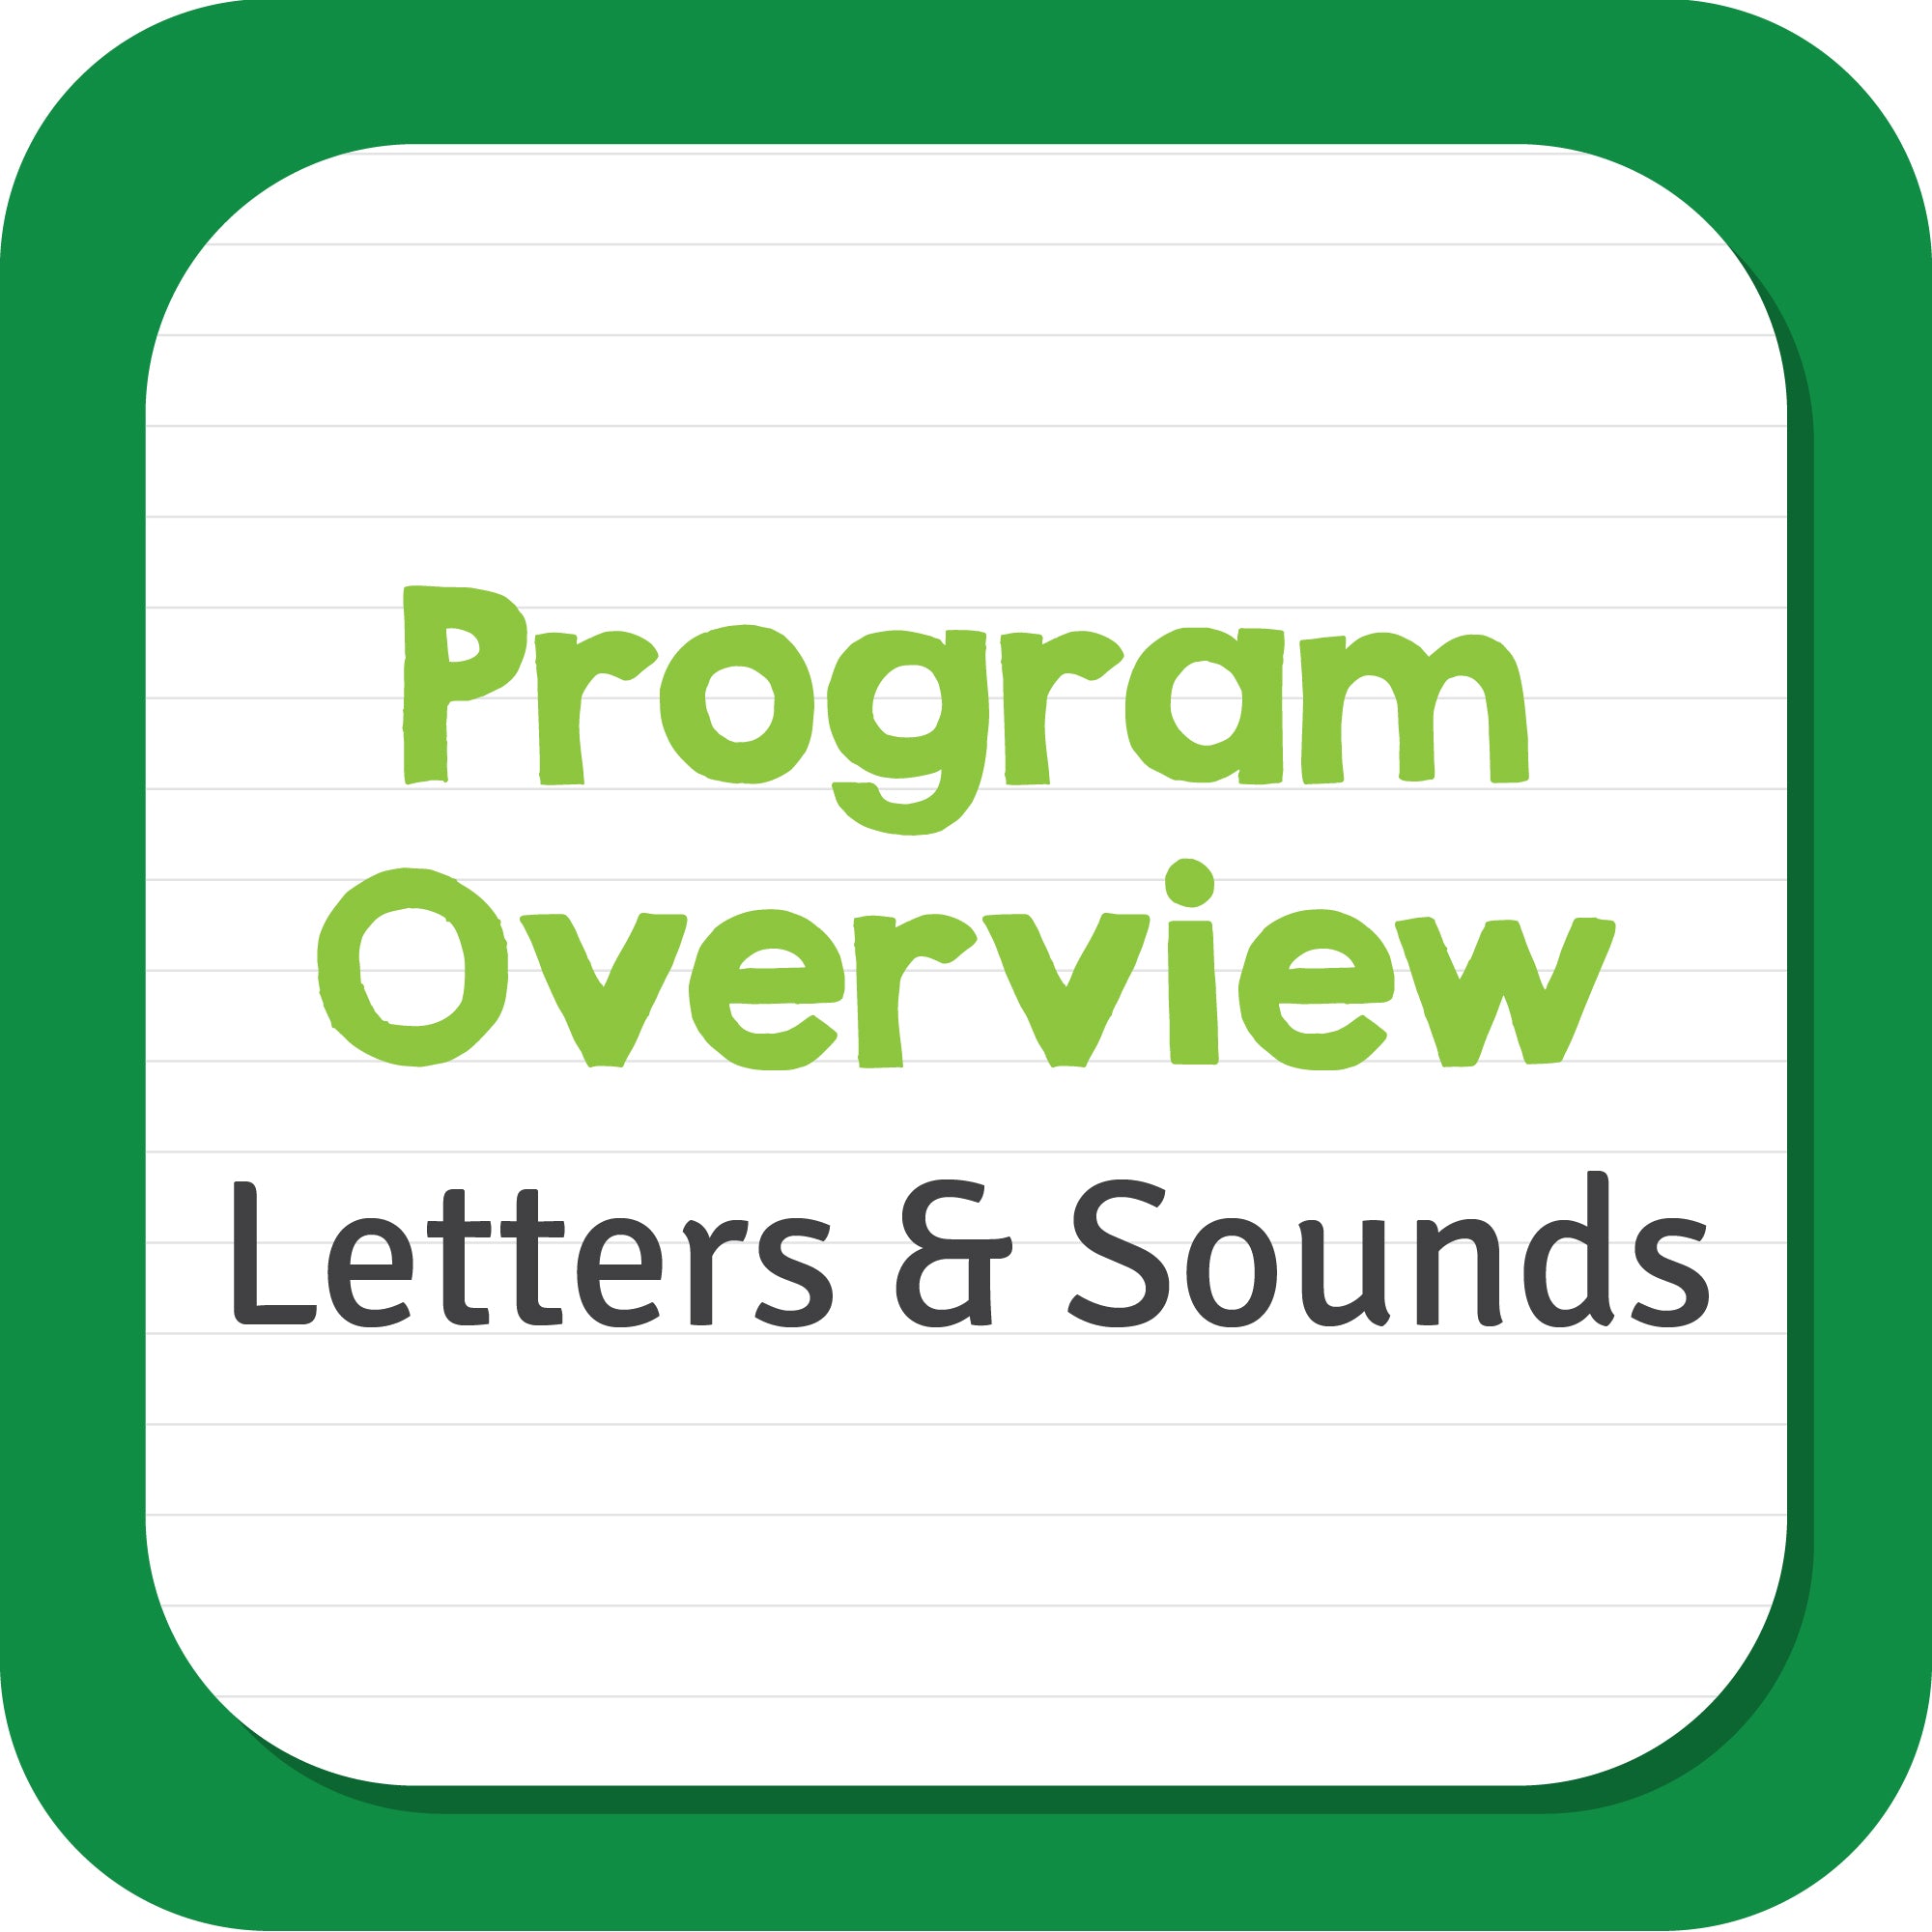 Letters & Sounds Program Overview